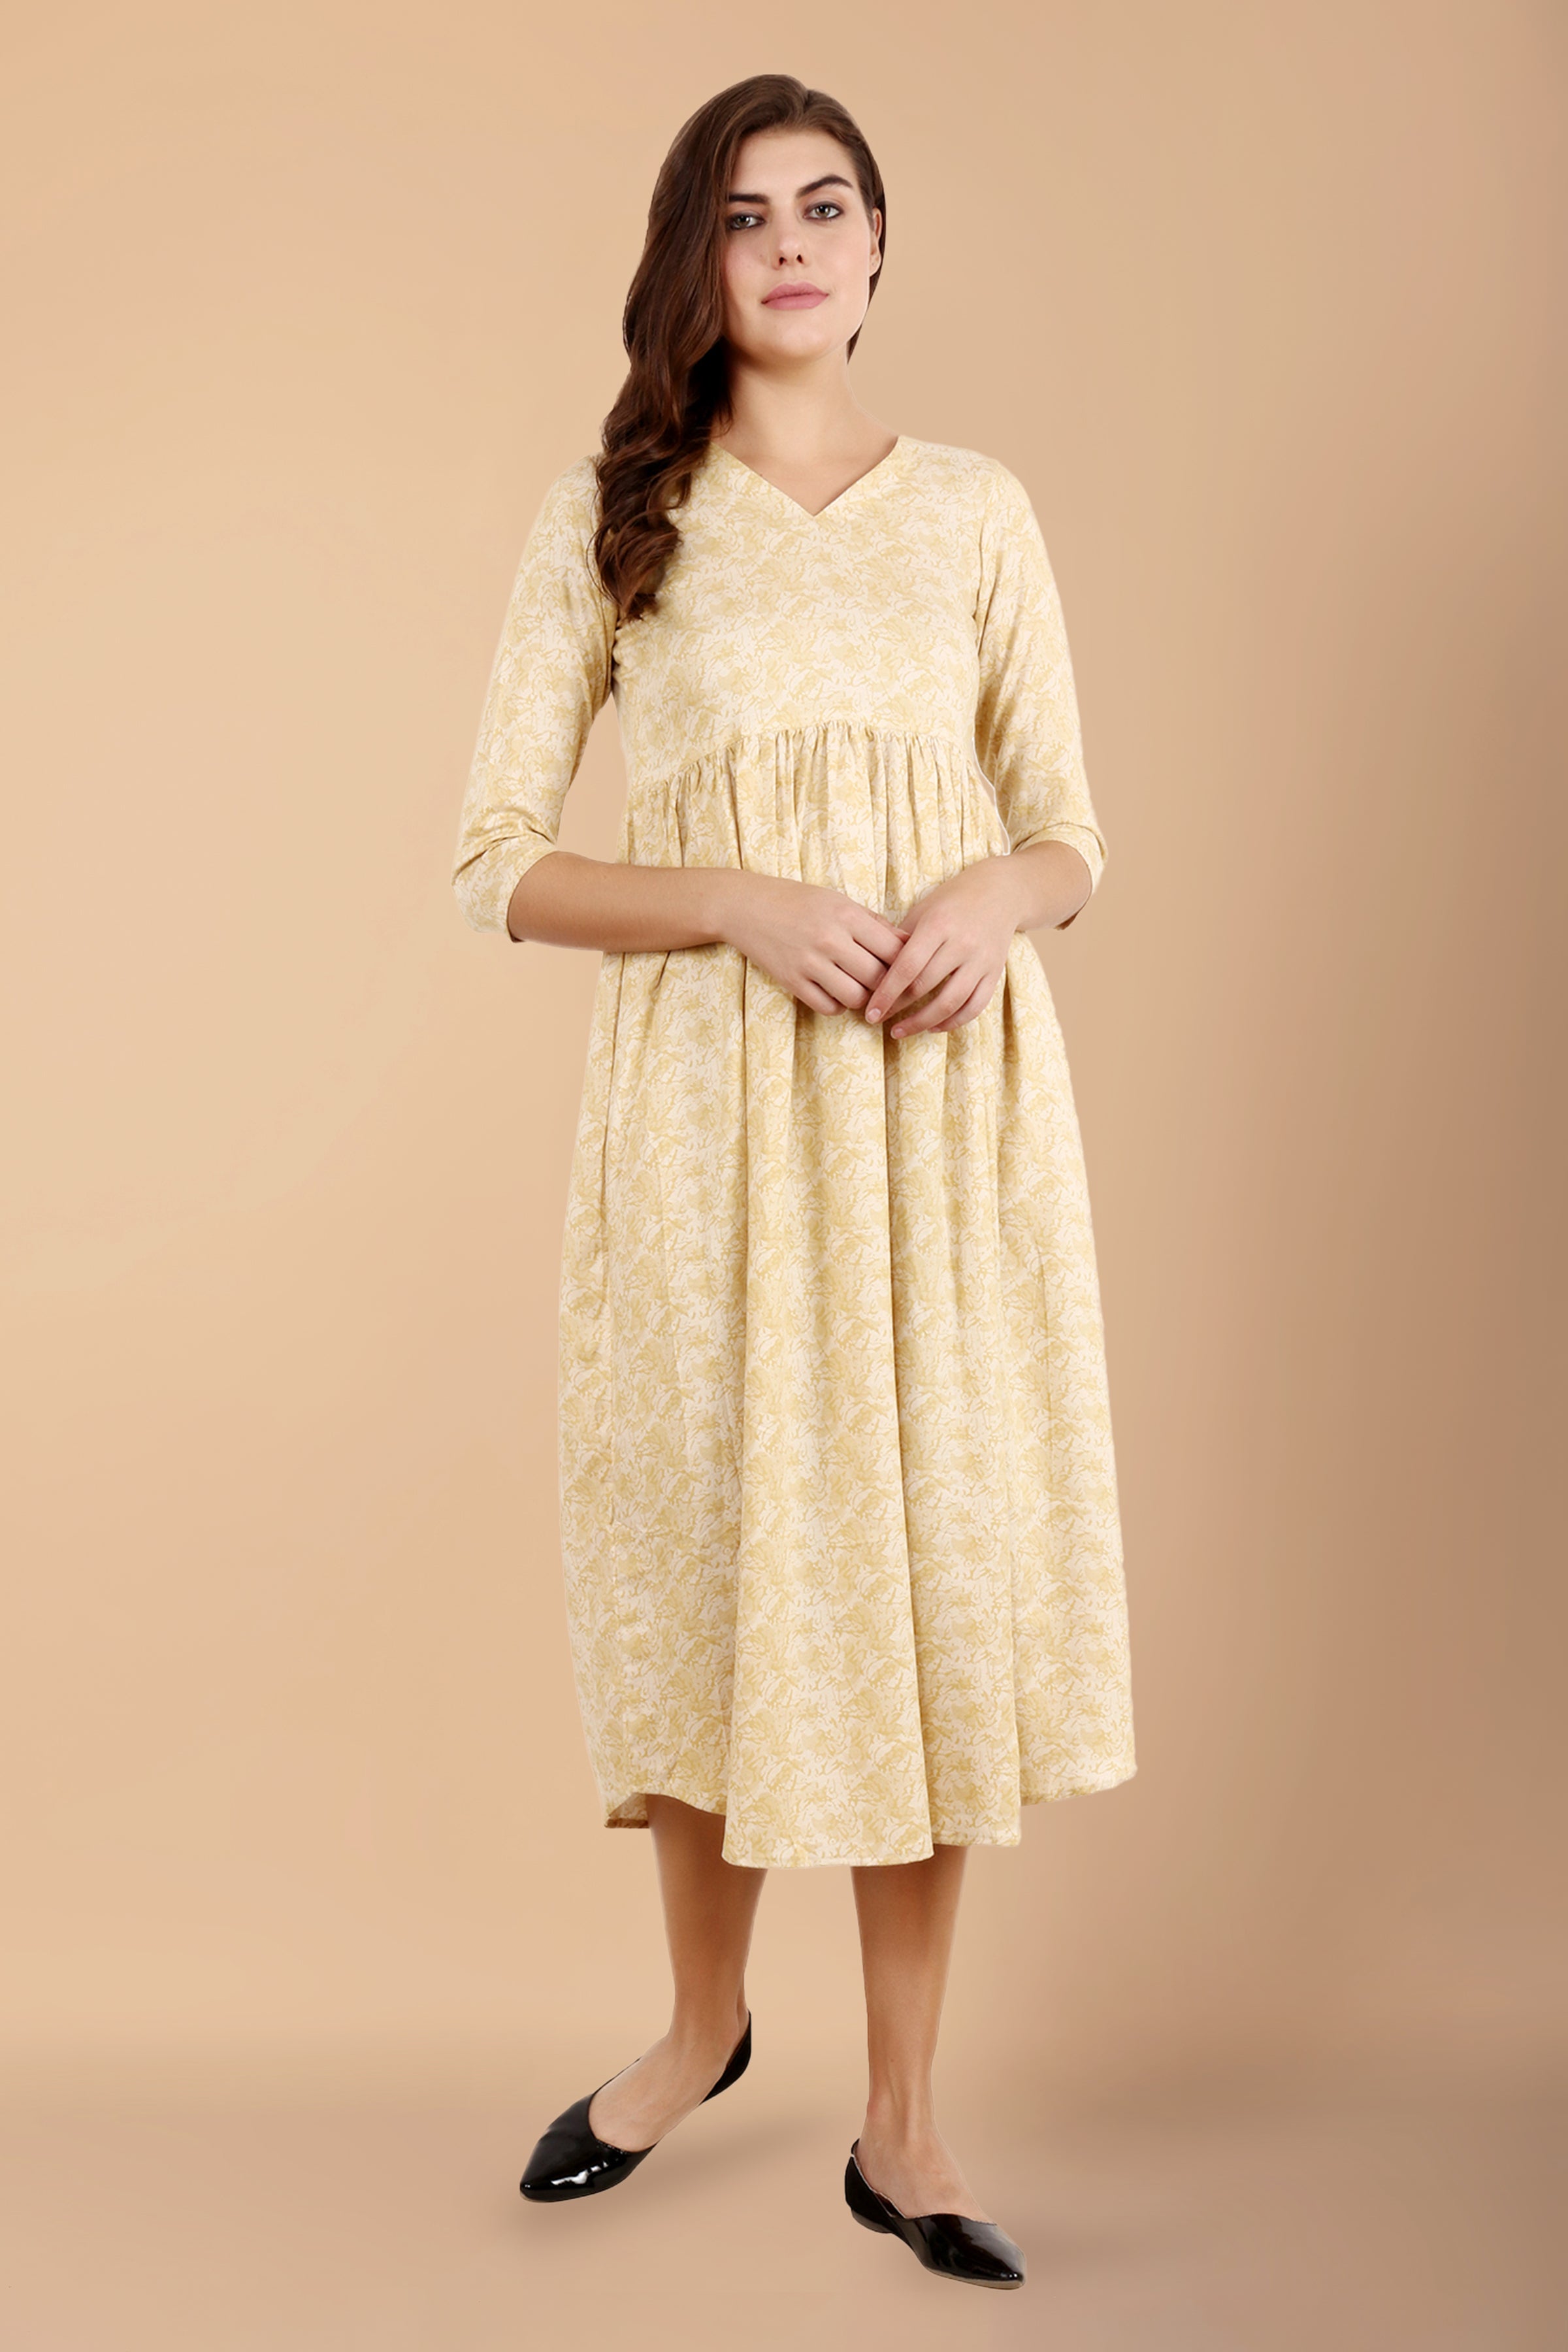 MY MICHELLE Lace Cream Color Dress~Size 13 | eBay